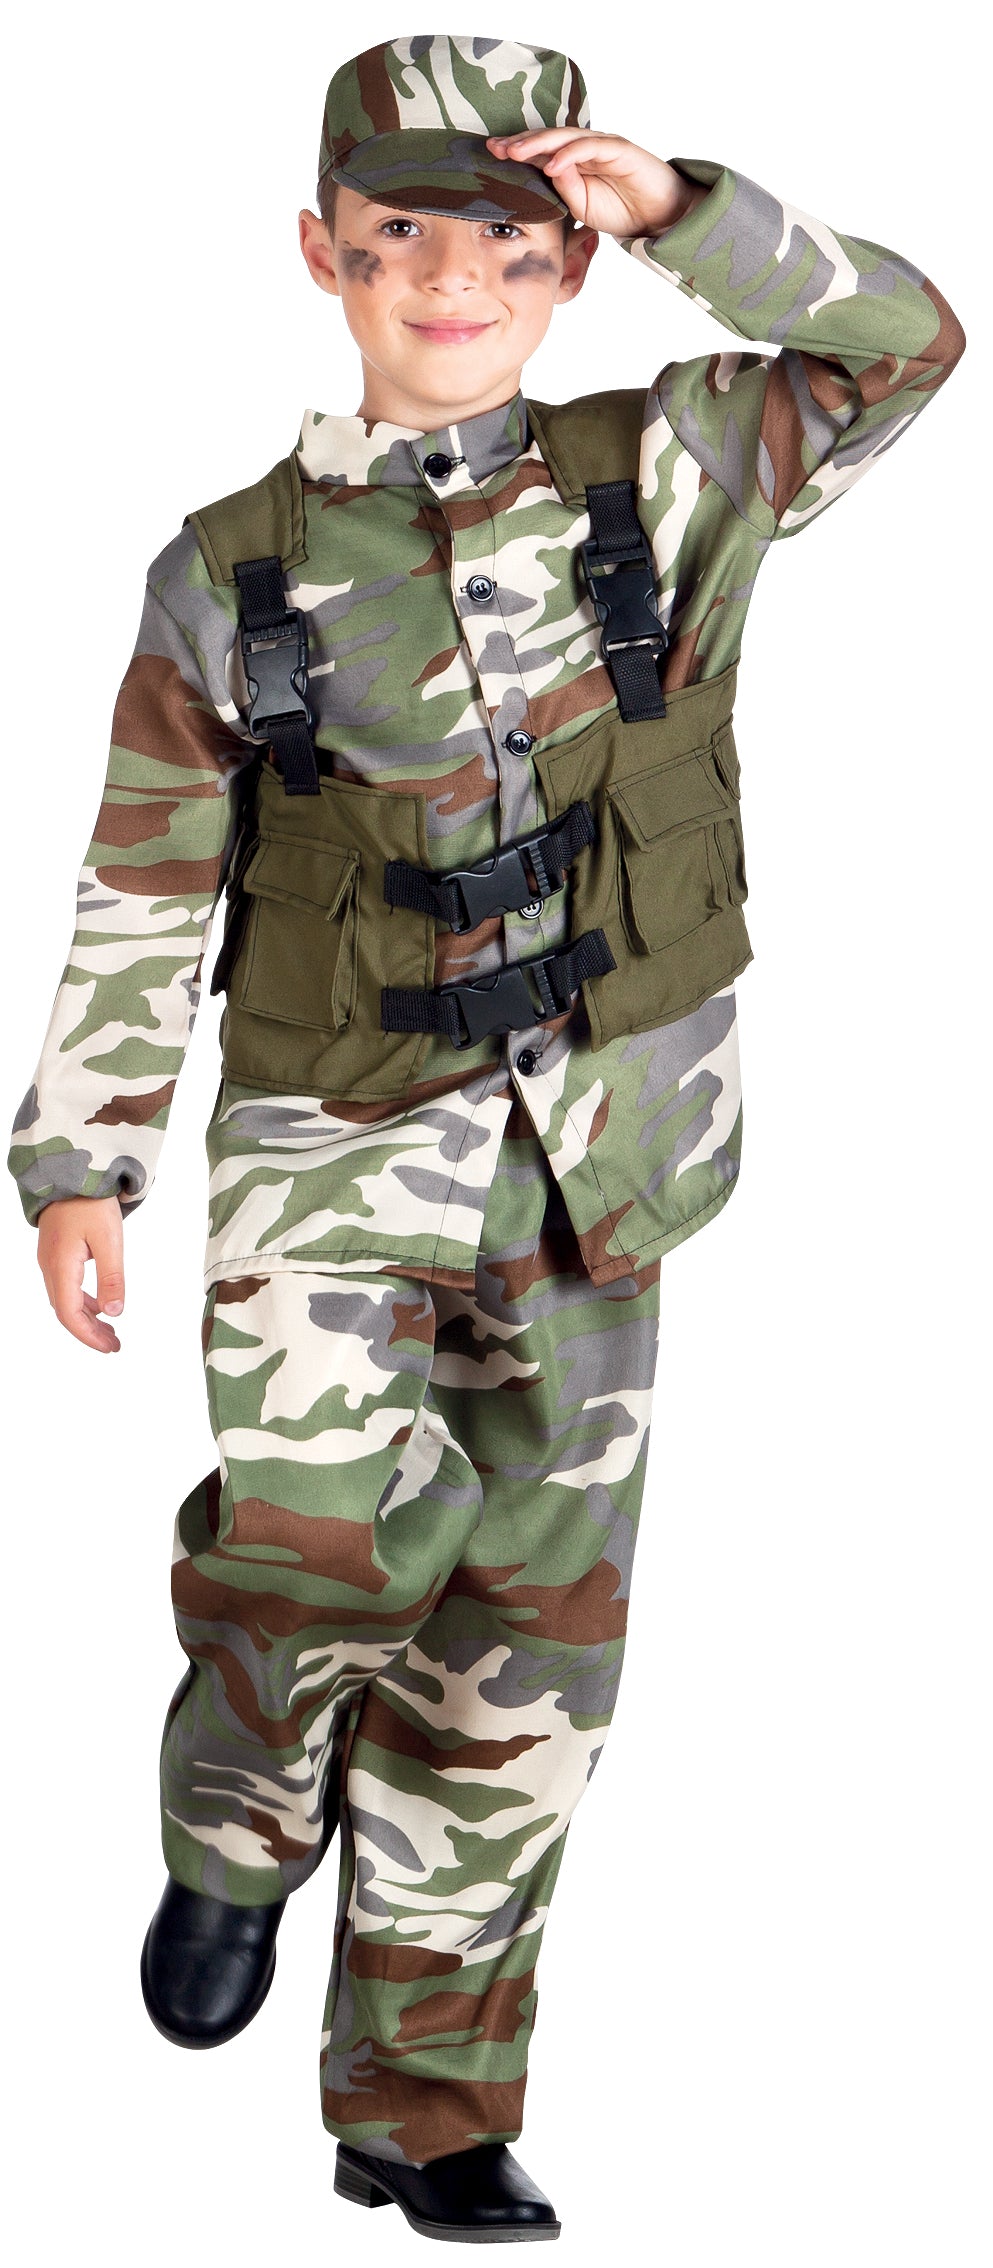 Boys Soldier Costume